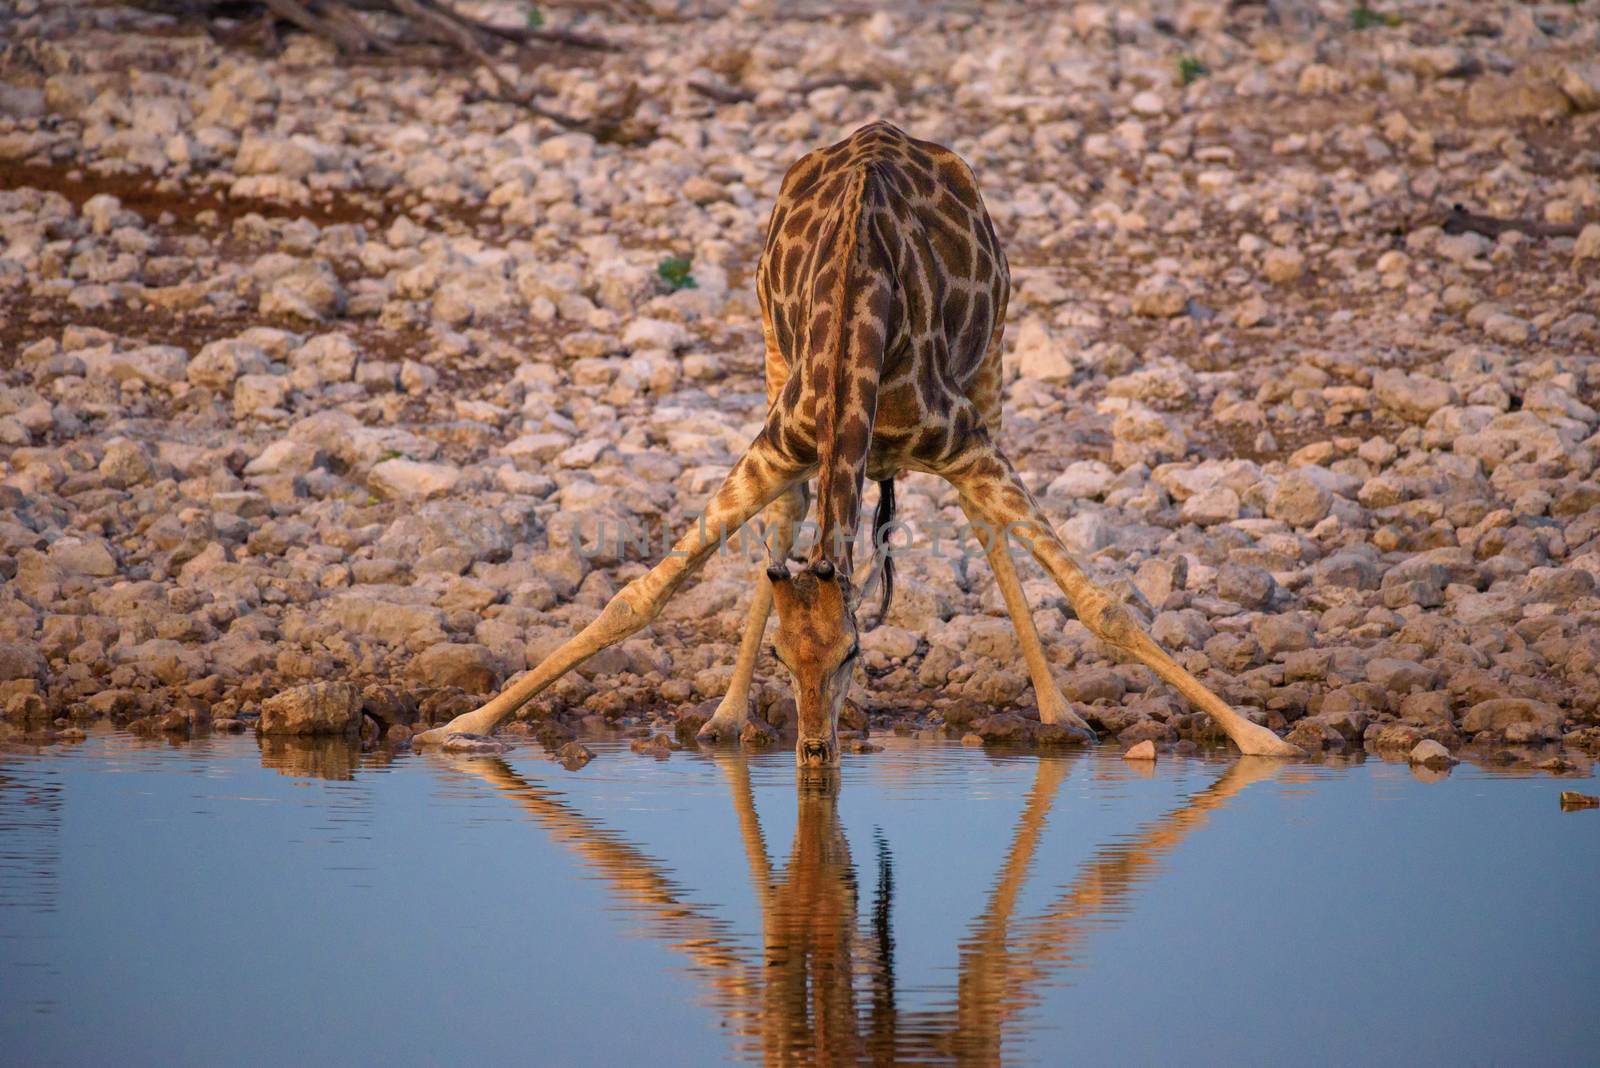 Giraffe drinks water at sunrise in Etosha National Park, Namibia by nickfox